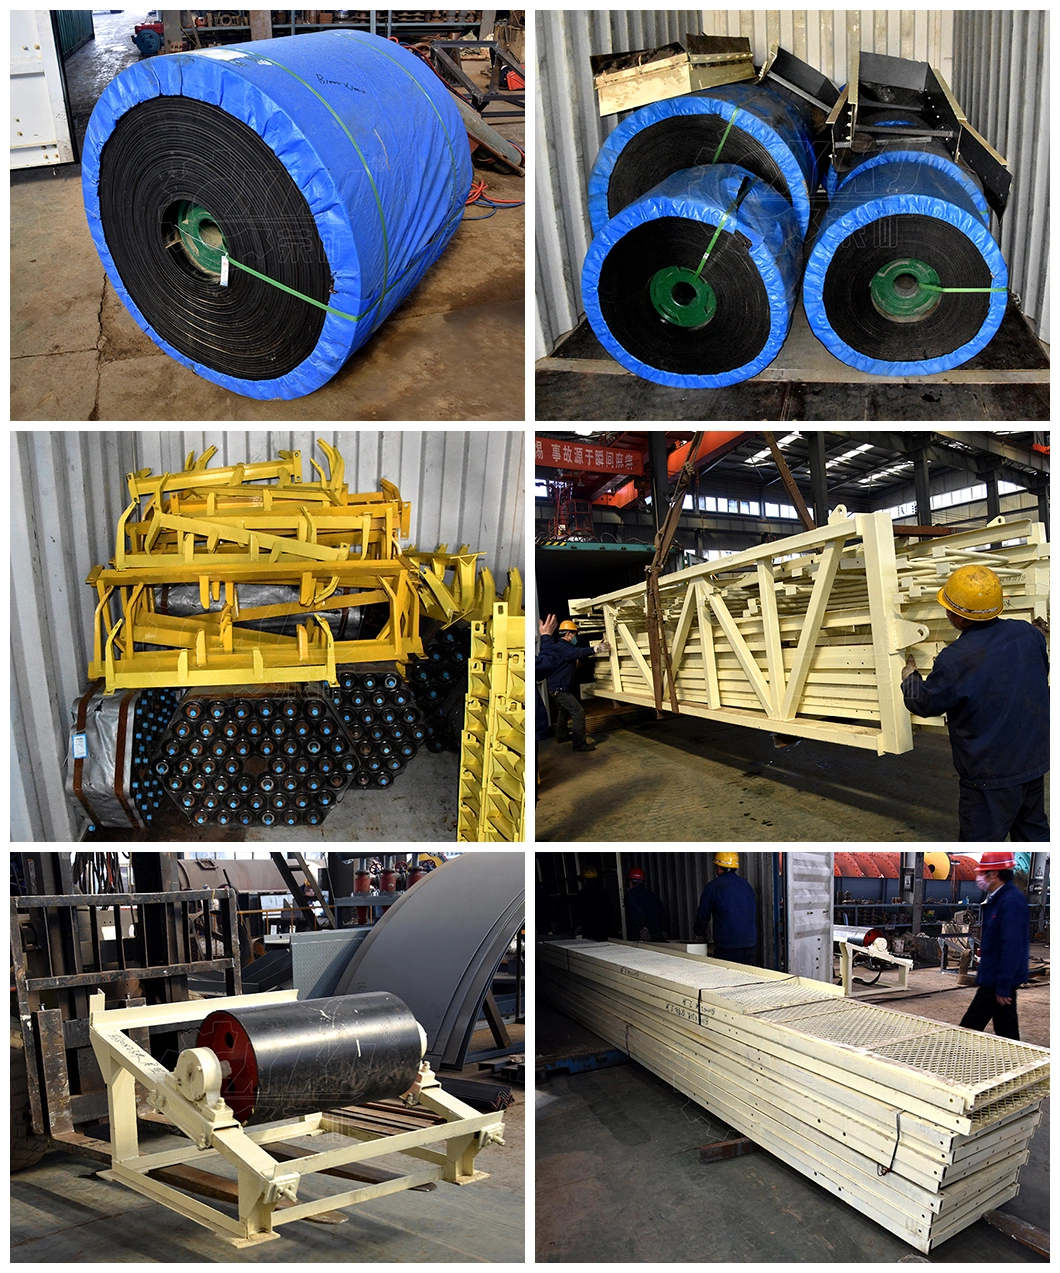 B500, 650, 800, 1000 Custom Easy to Operate Gravity PVC Belt Conveyor System